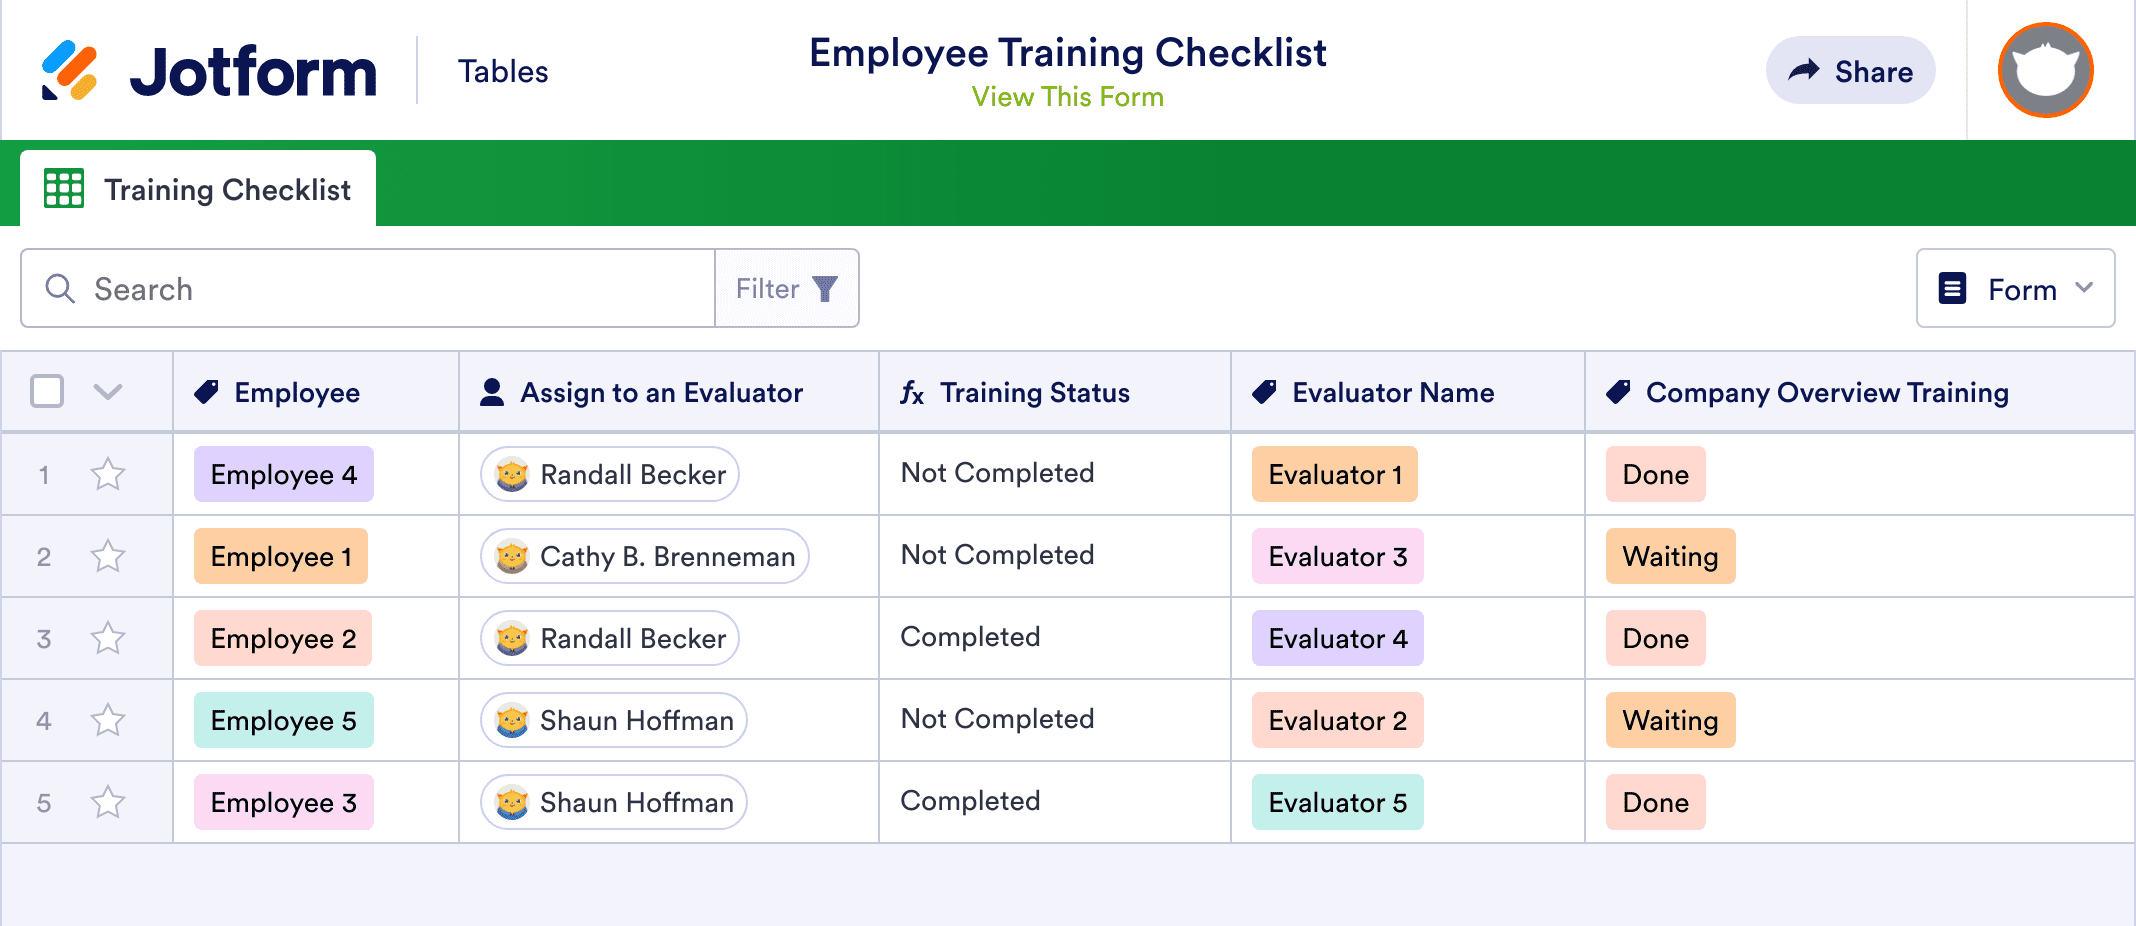 Employee Training Checklist Template